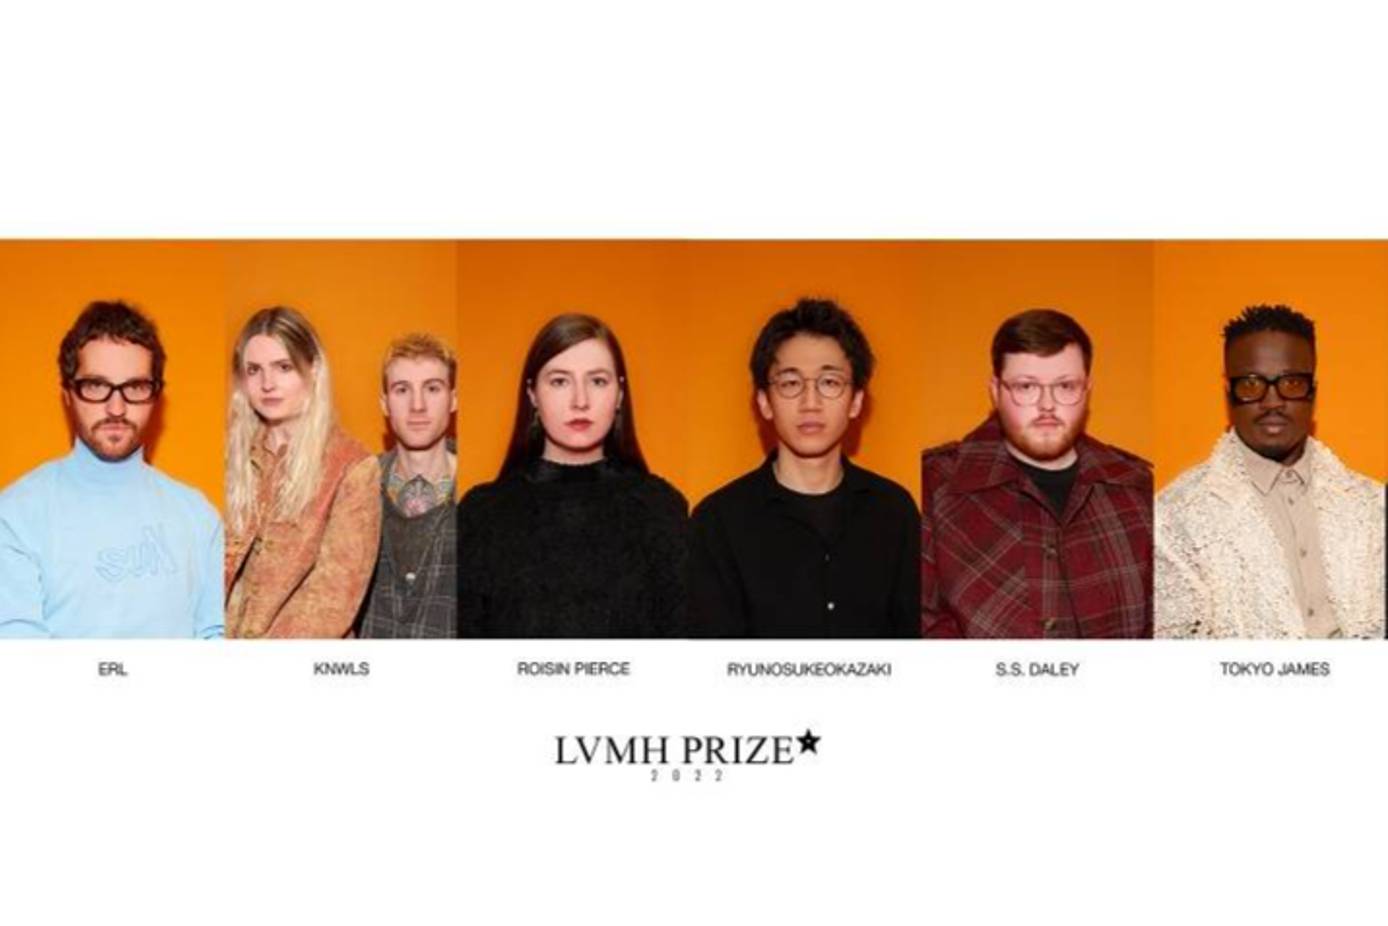 LVMH Prize 2022 announces the eight fashion designer finalists